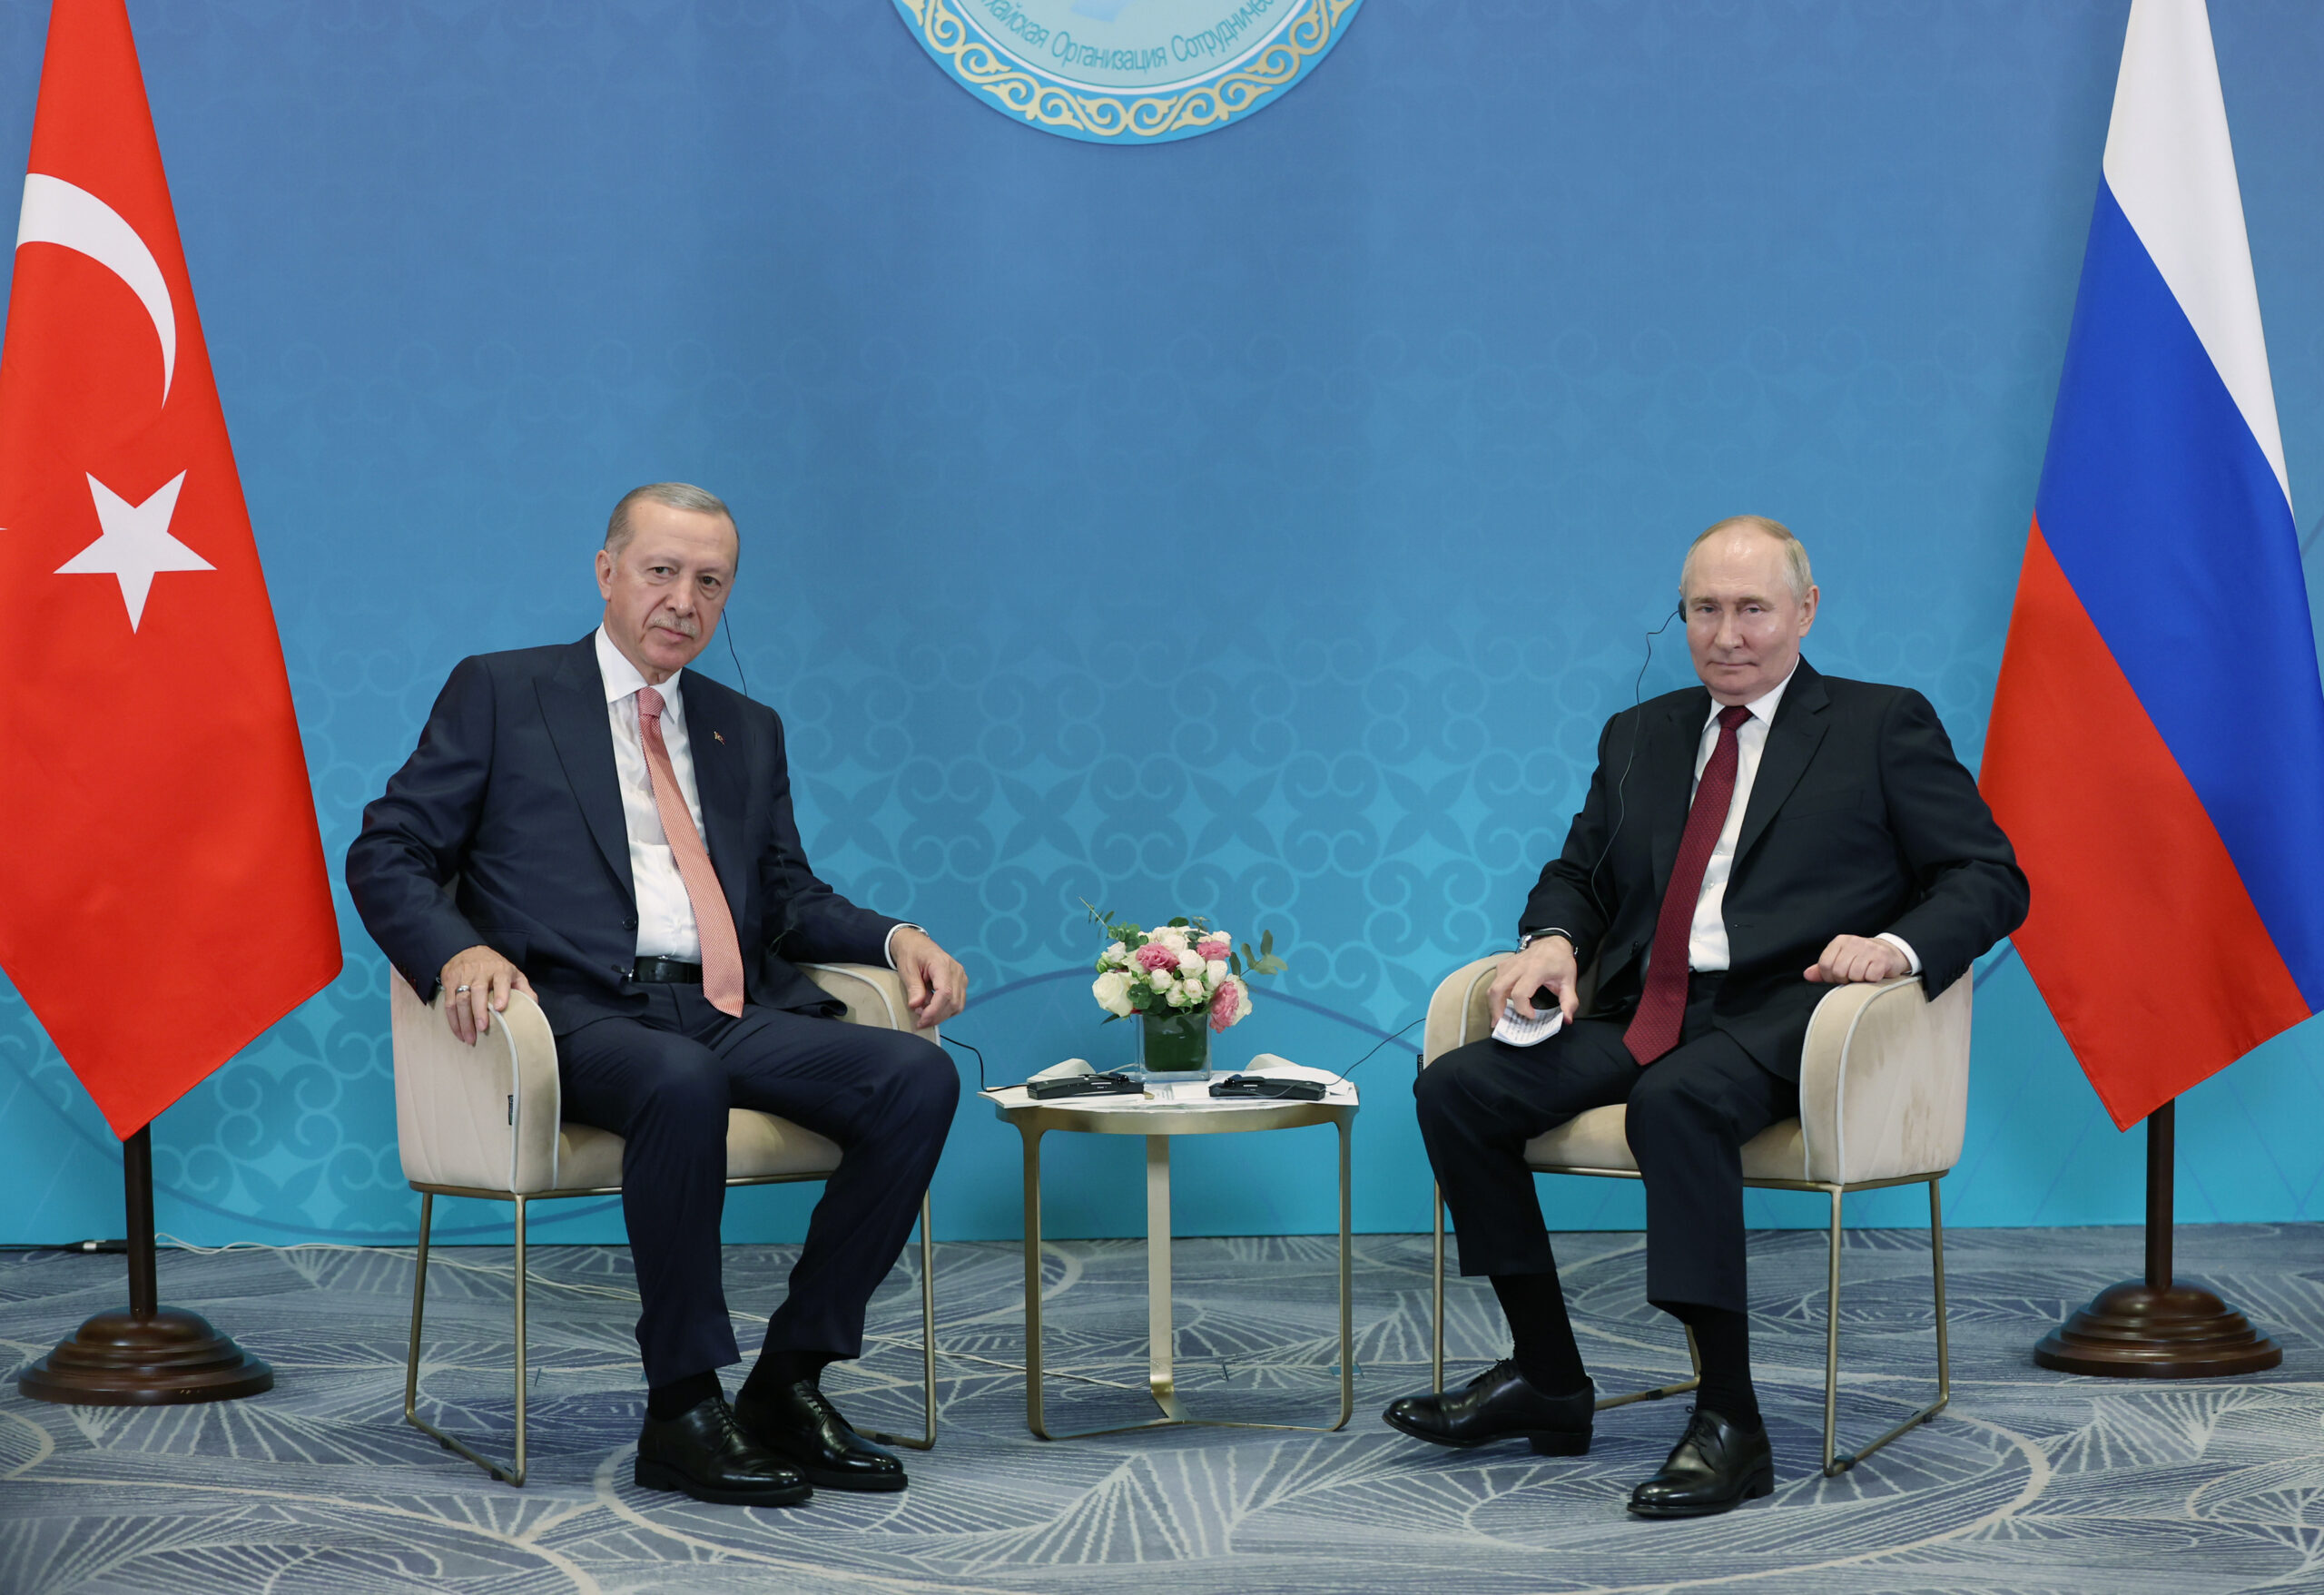 President Erdogan conveys normalization message to Assad through Putin